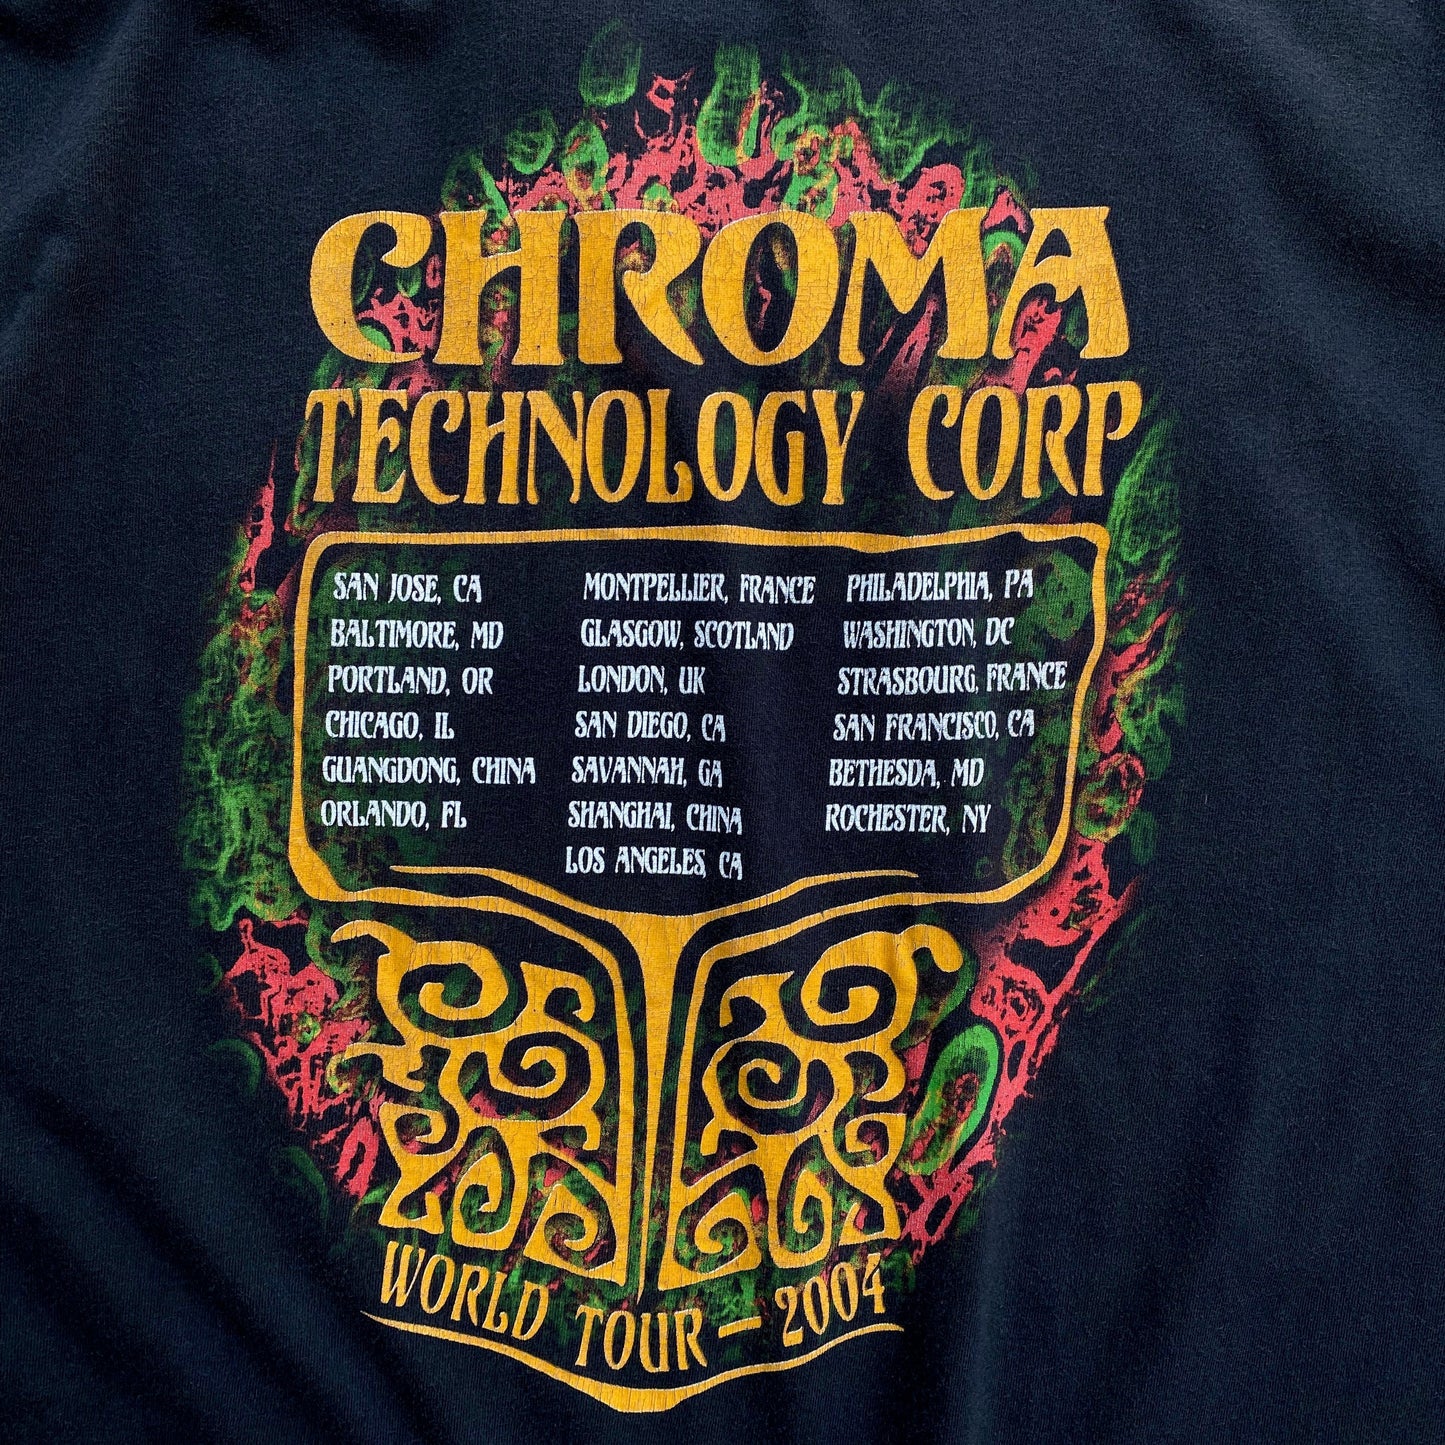 90's CHROMA TECHNOLOGY CORP "WORLD TOUR" T-SHIRT